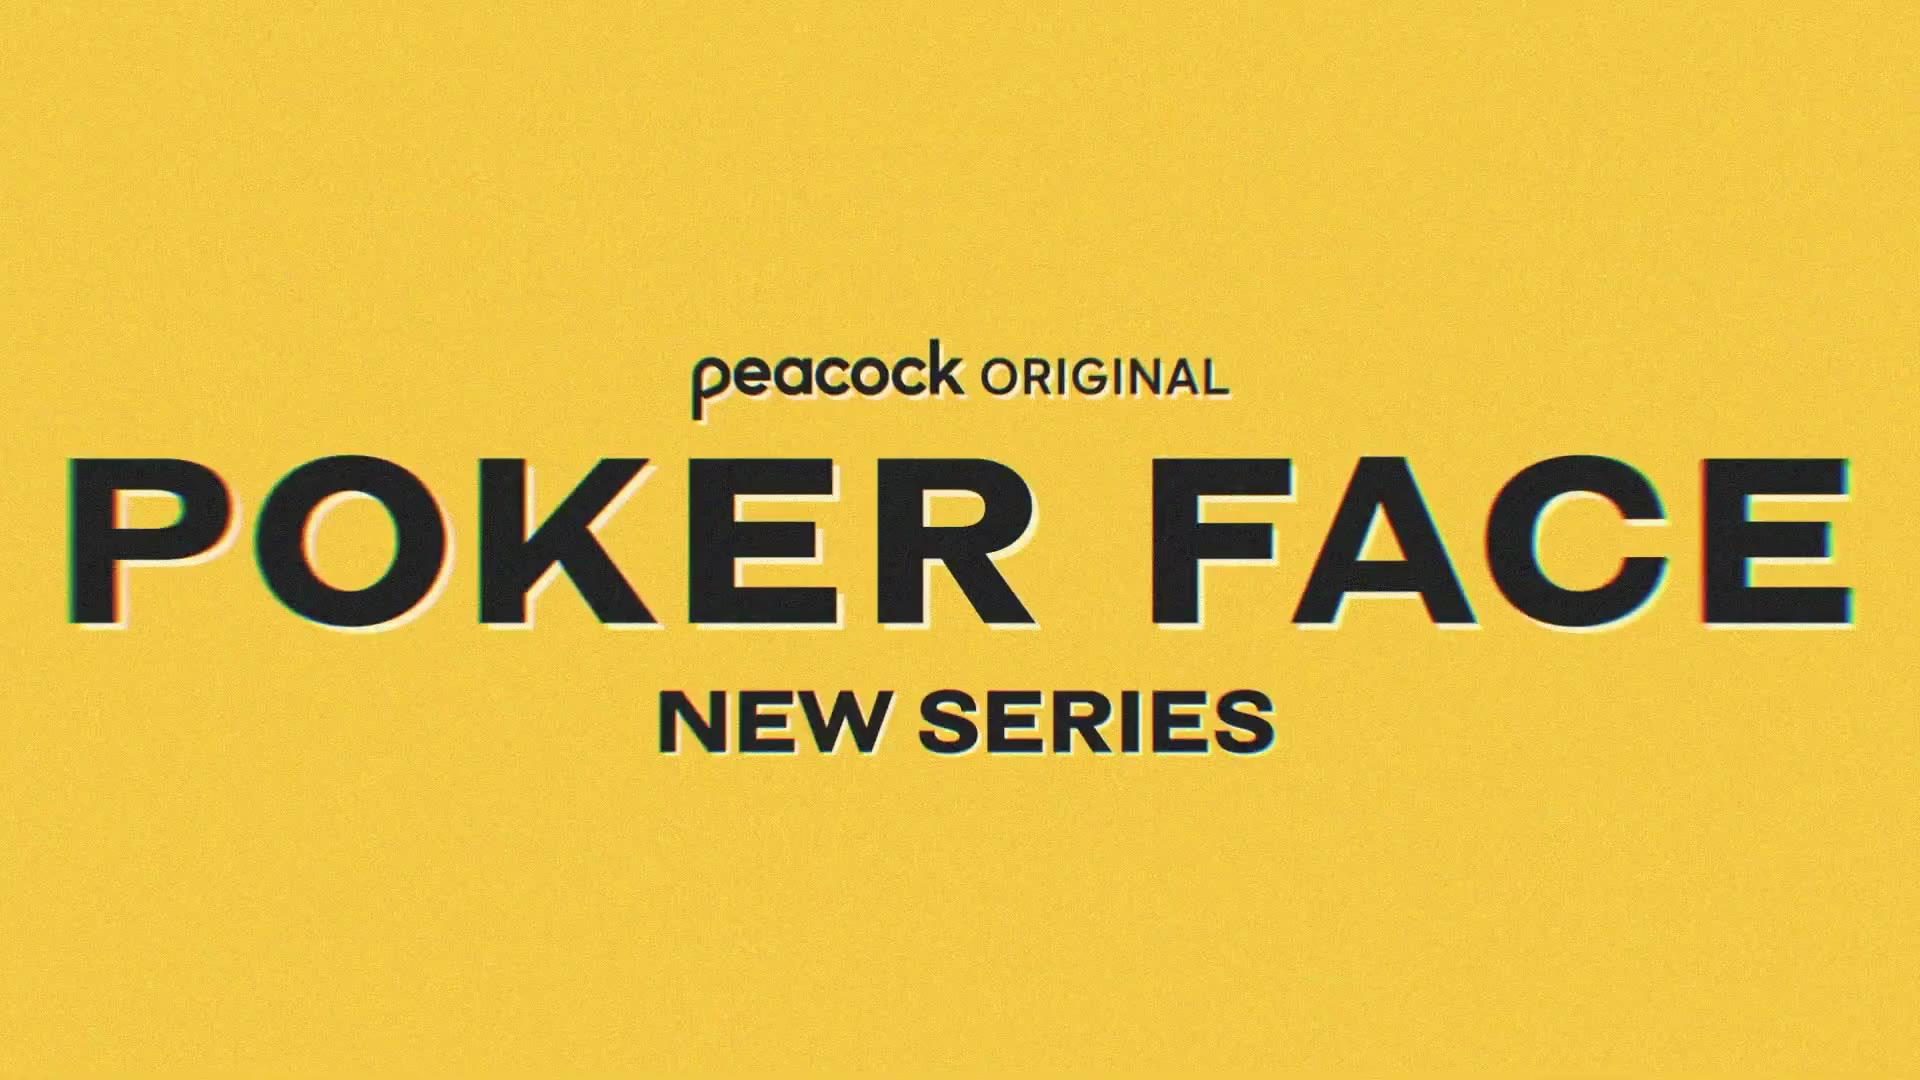 Poker Face' Review - Rian Johnson's Stylish Howcatchem